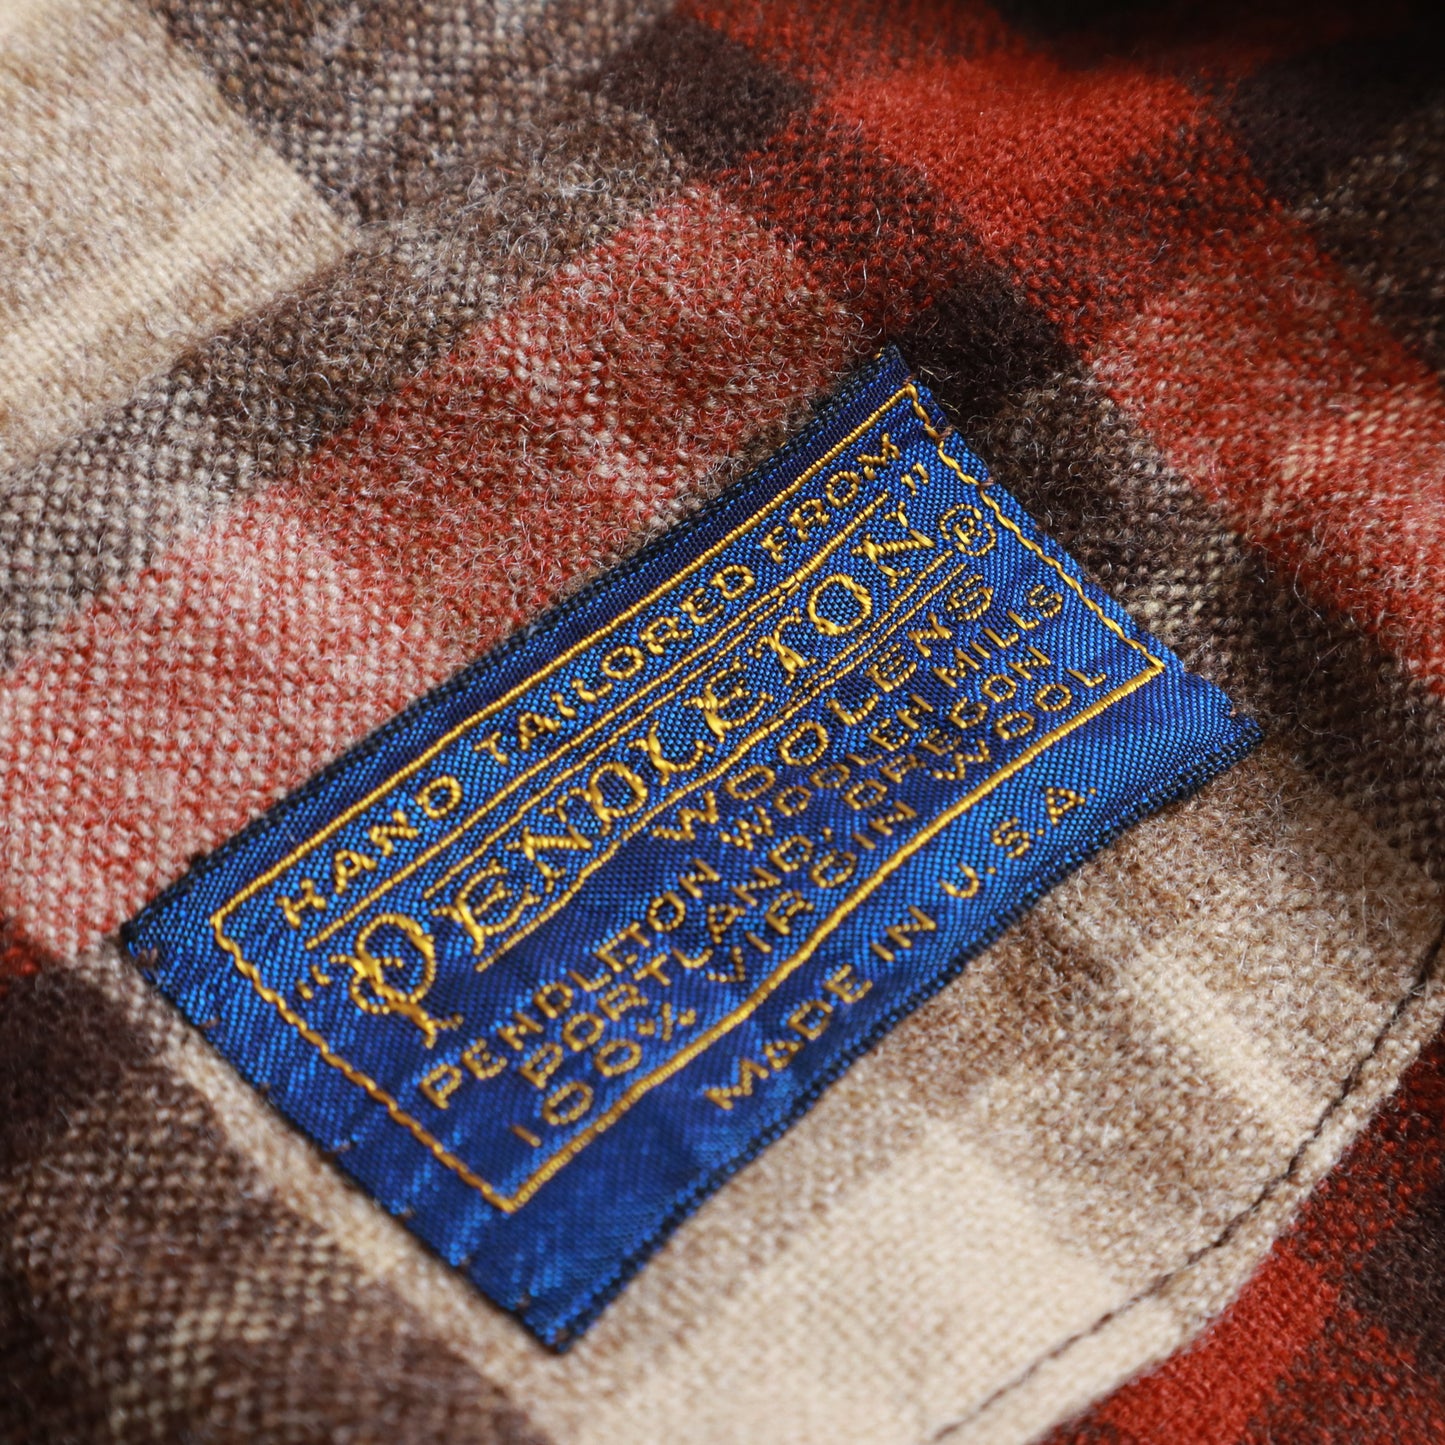 1970s Pendleton American Made Brown Check Wool Shirt